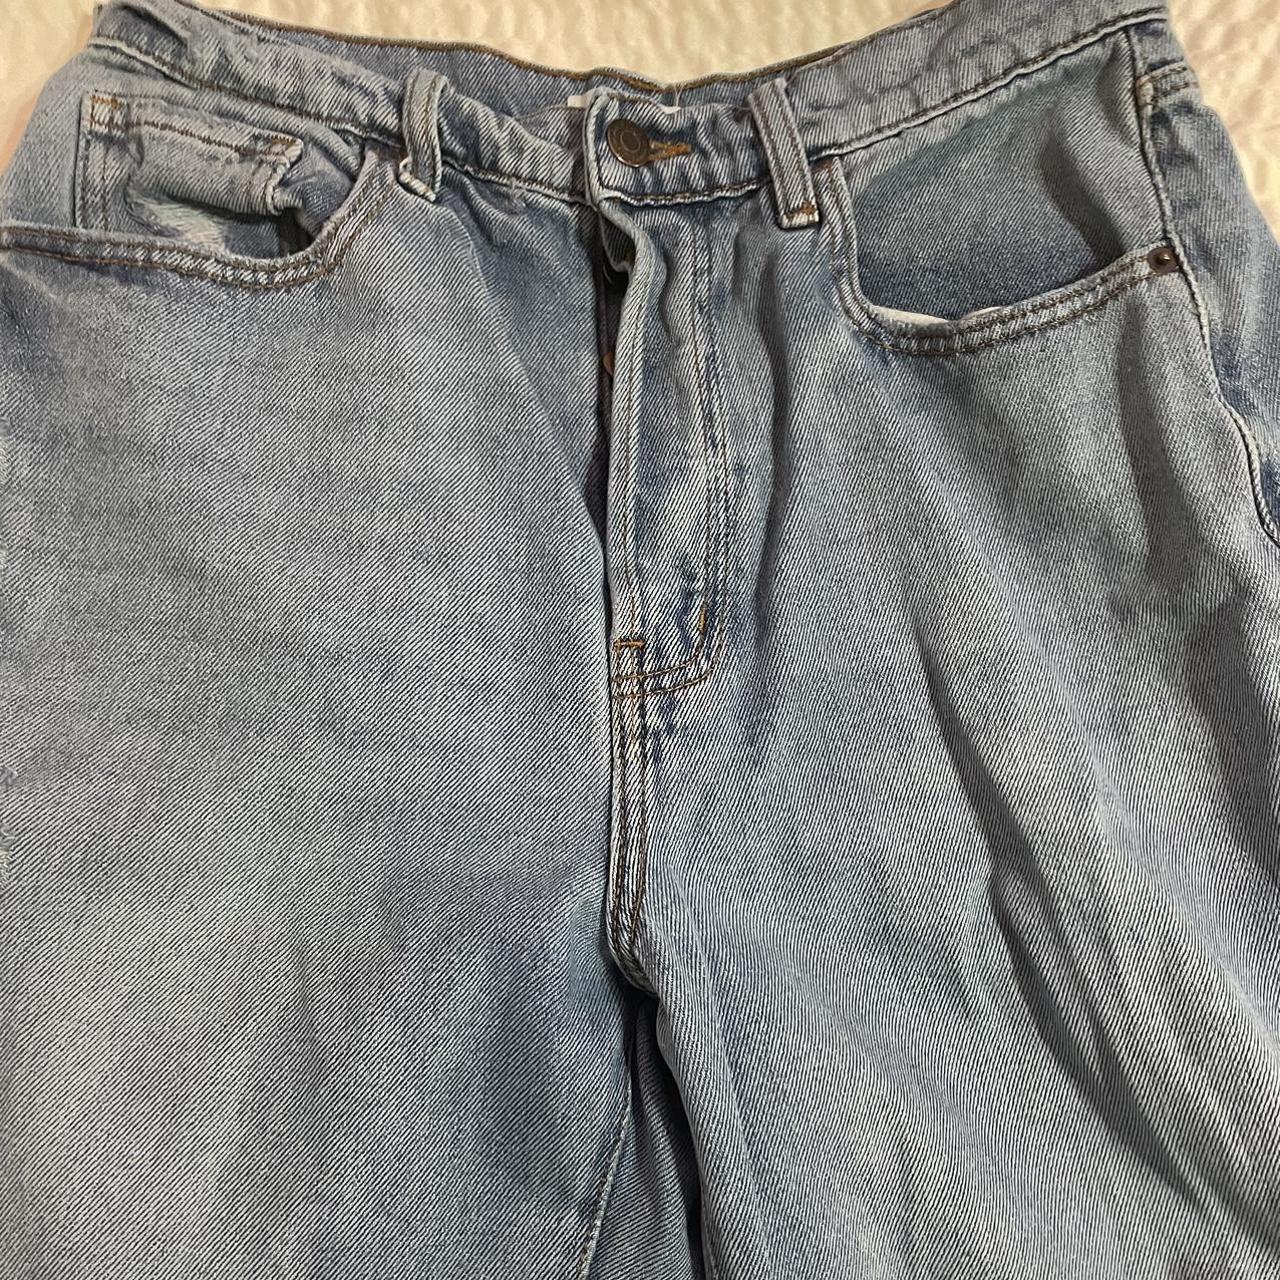 -women’s ripped baggy jeans -size 9 - Depop